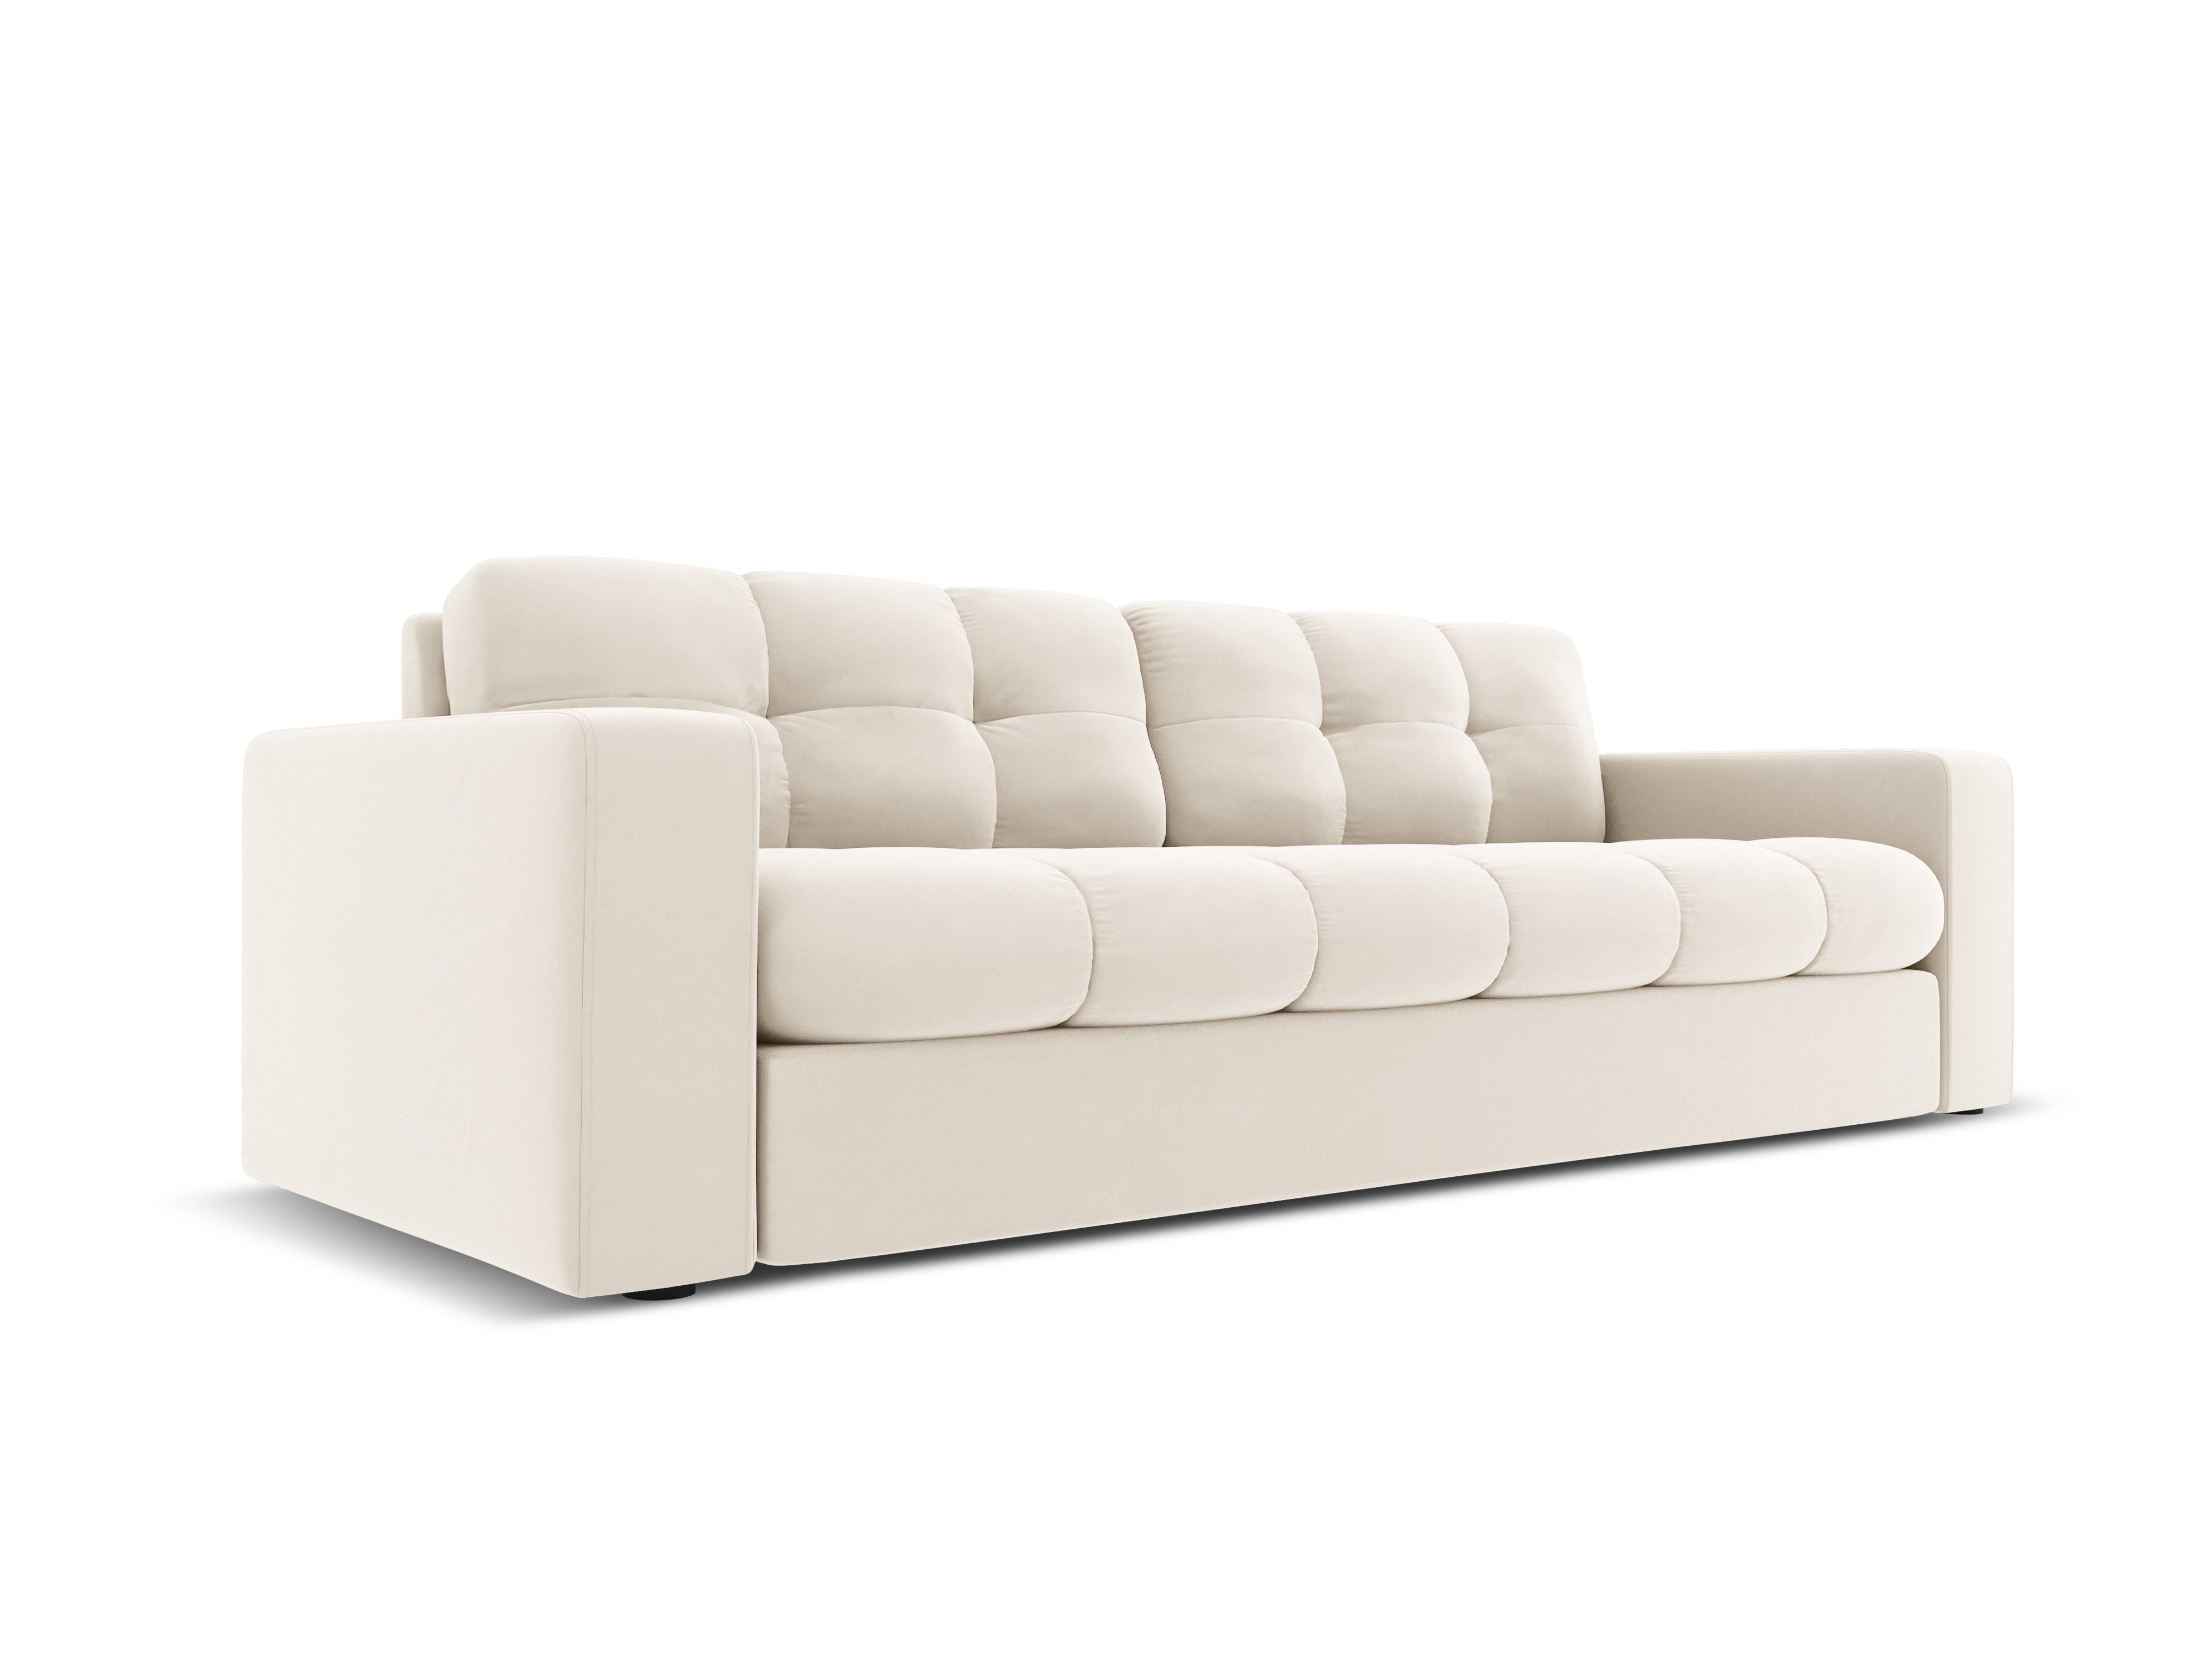 Velvet Sofa, "Justin", 3 Seats, 202x90x72
Made in Europe, Micadoni, Eye on Design